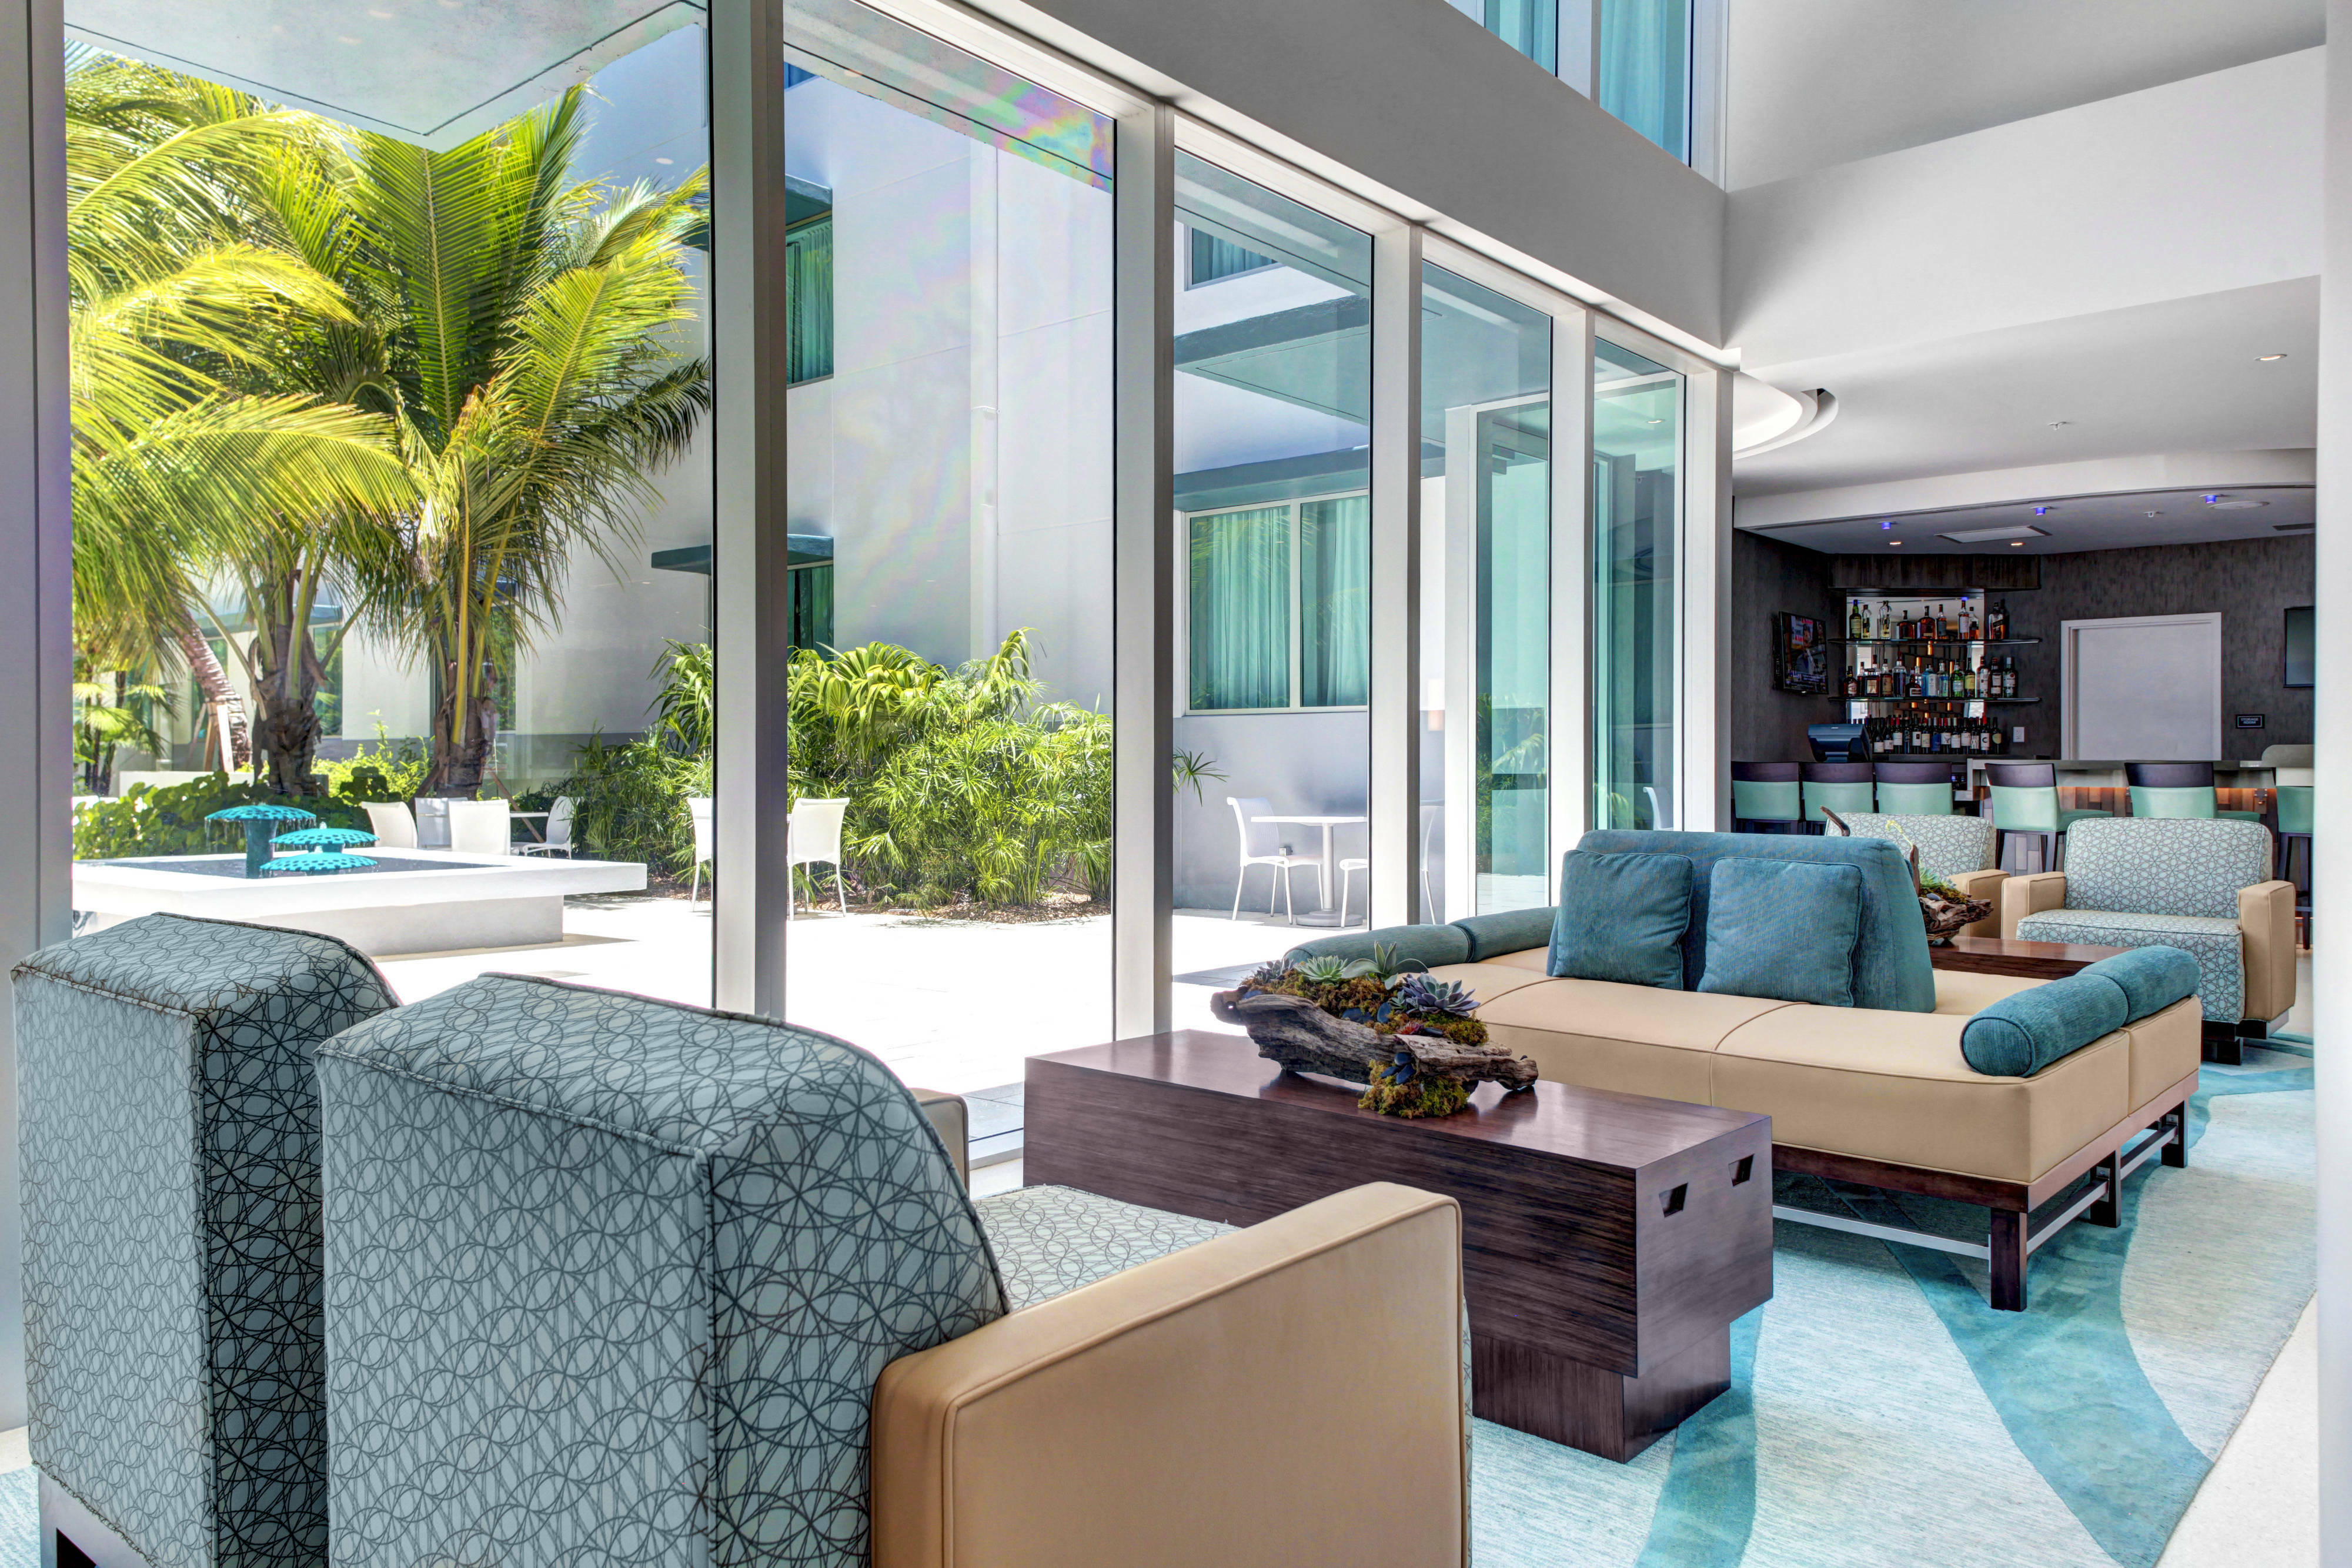 Photo of Residence Inn Miami Beach Surfside, Miami Beach, FL